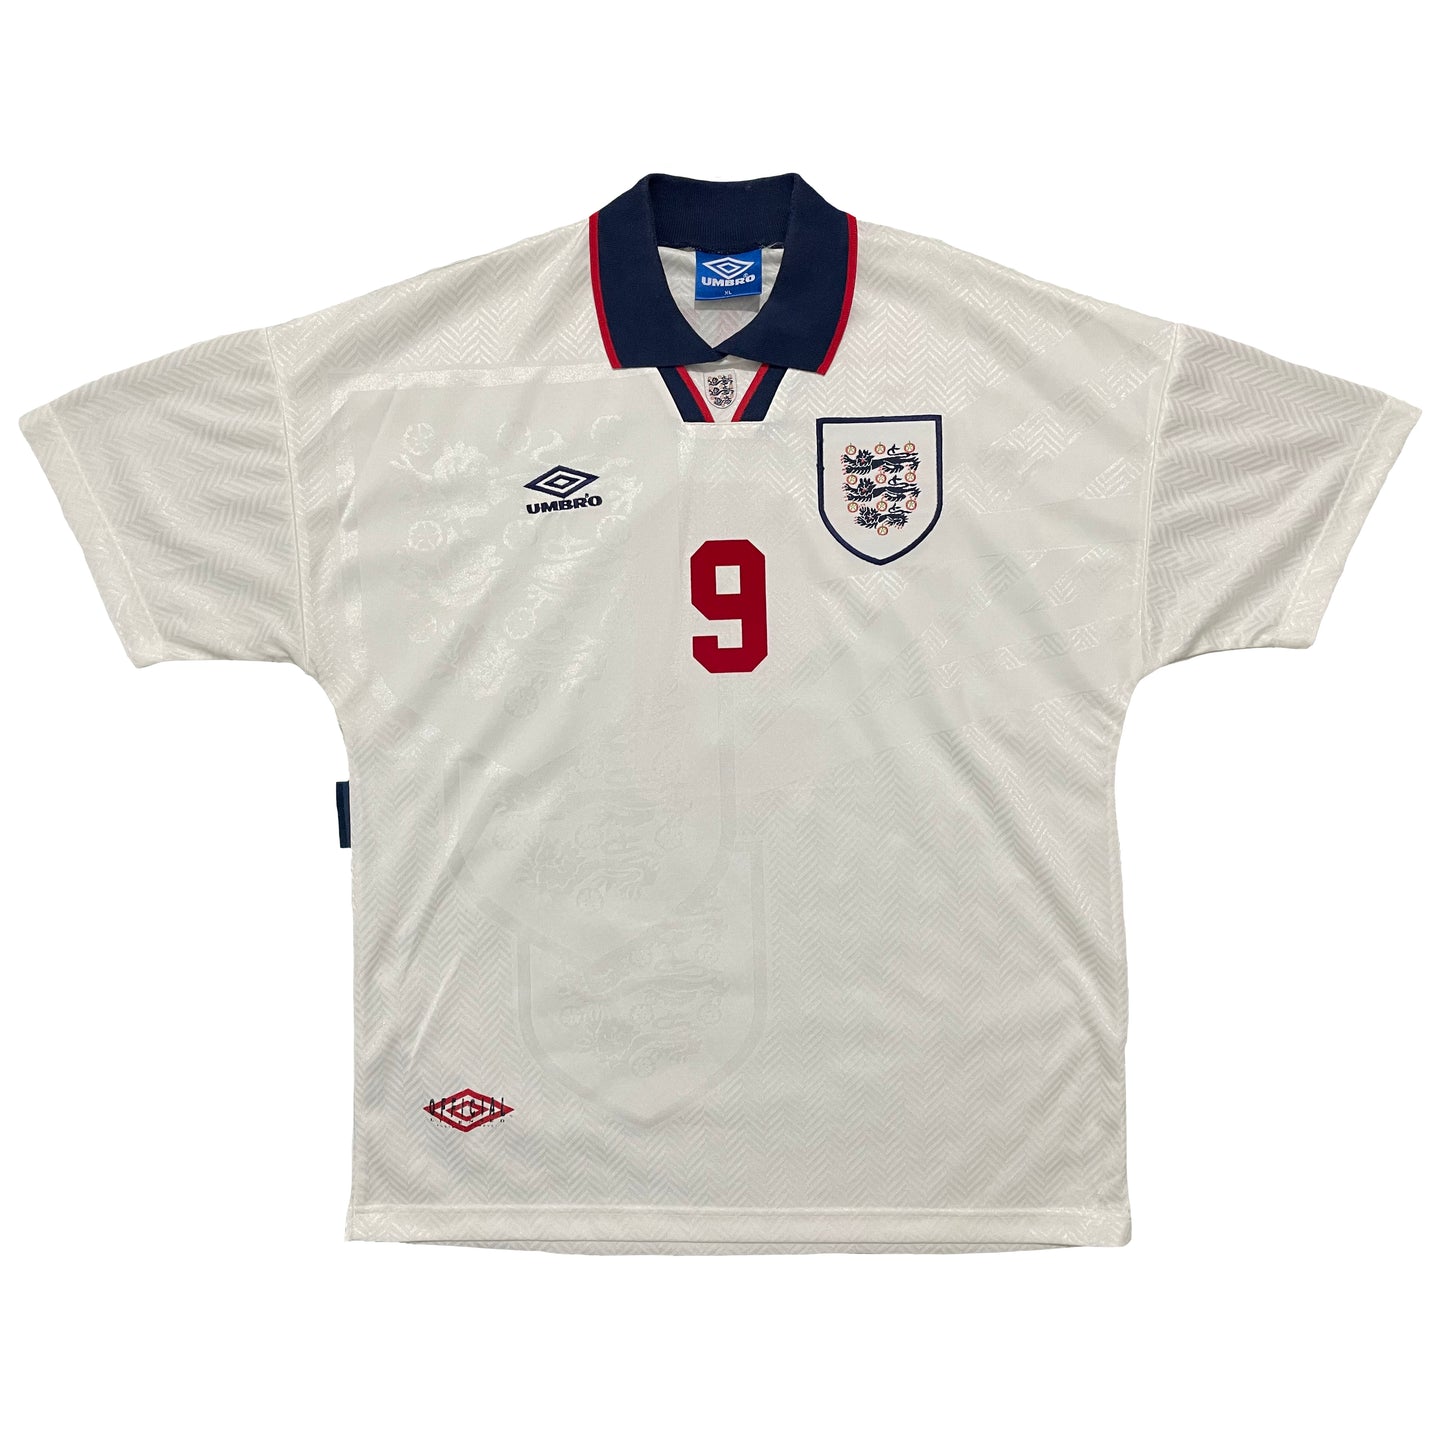 1993-1995 England home shirt #9 Shearer (XL)